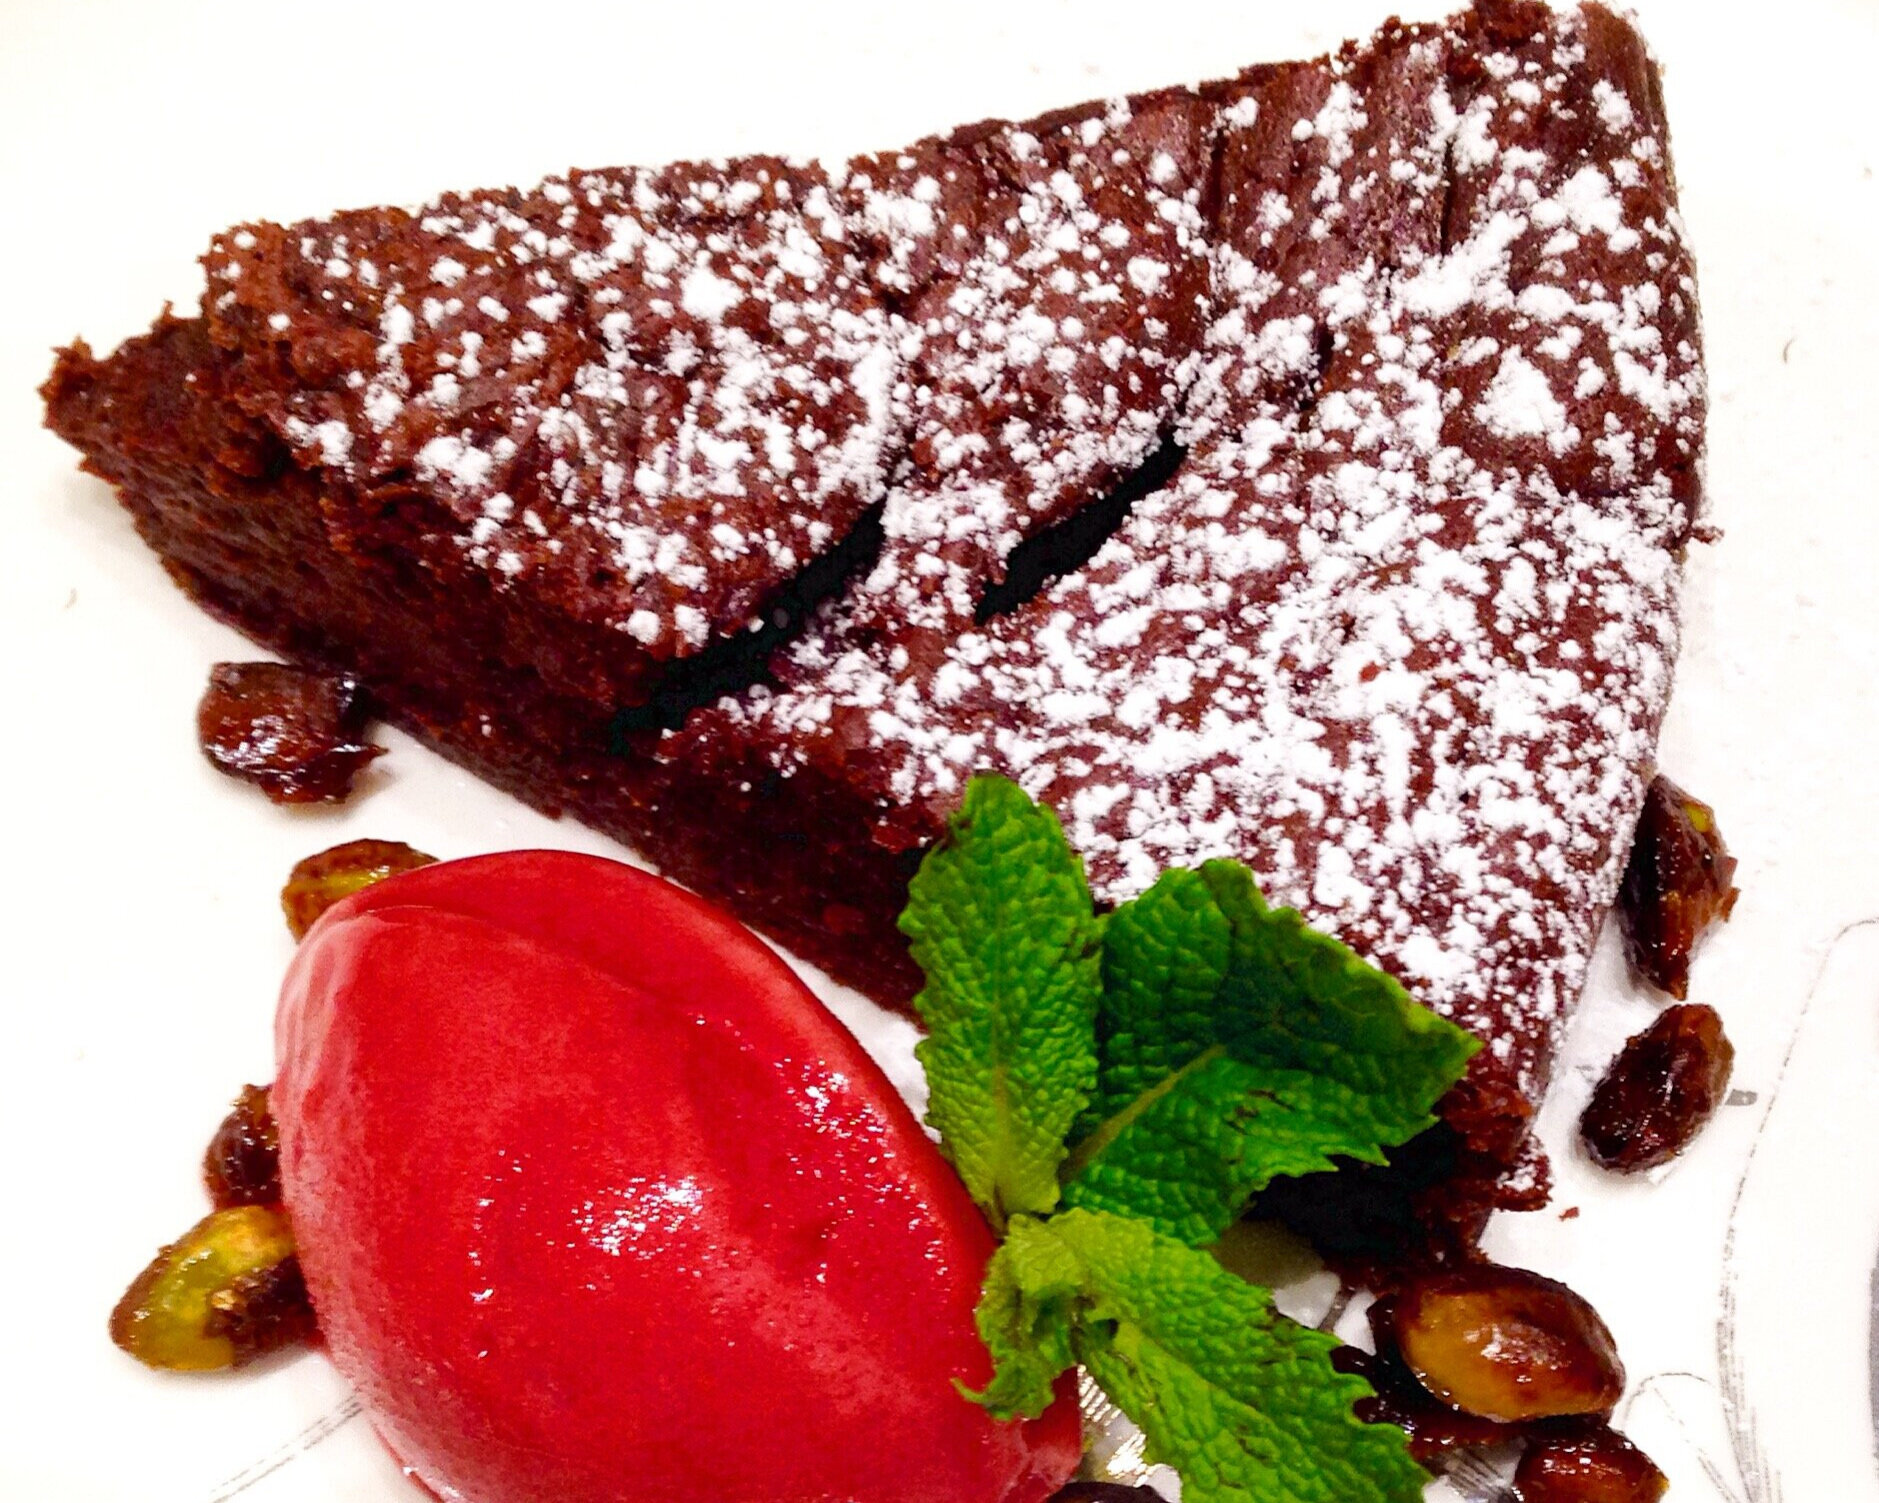 Flourless chocolate cake, raspberry sorbetto, candied pistachios